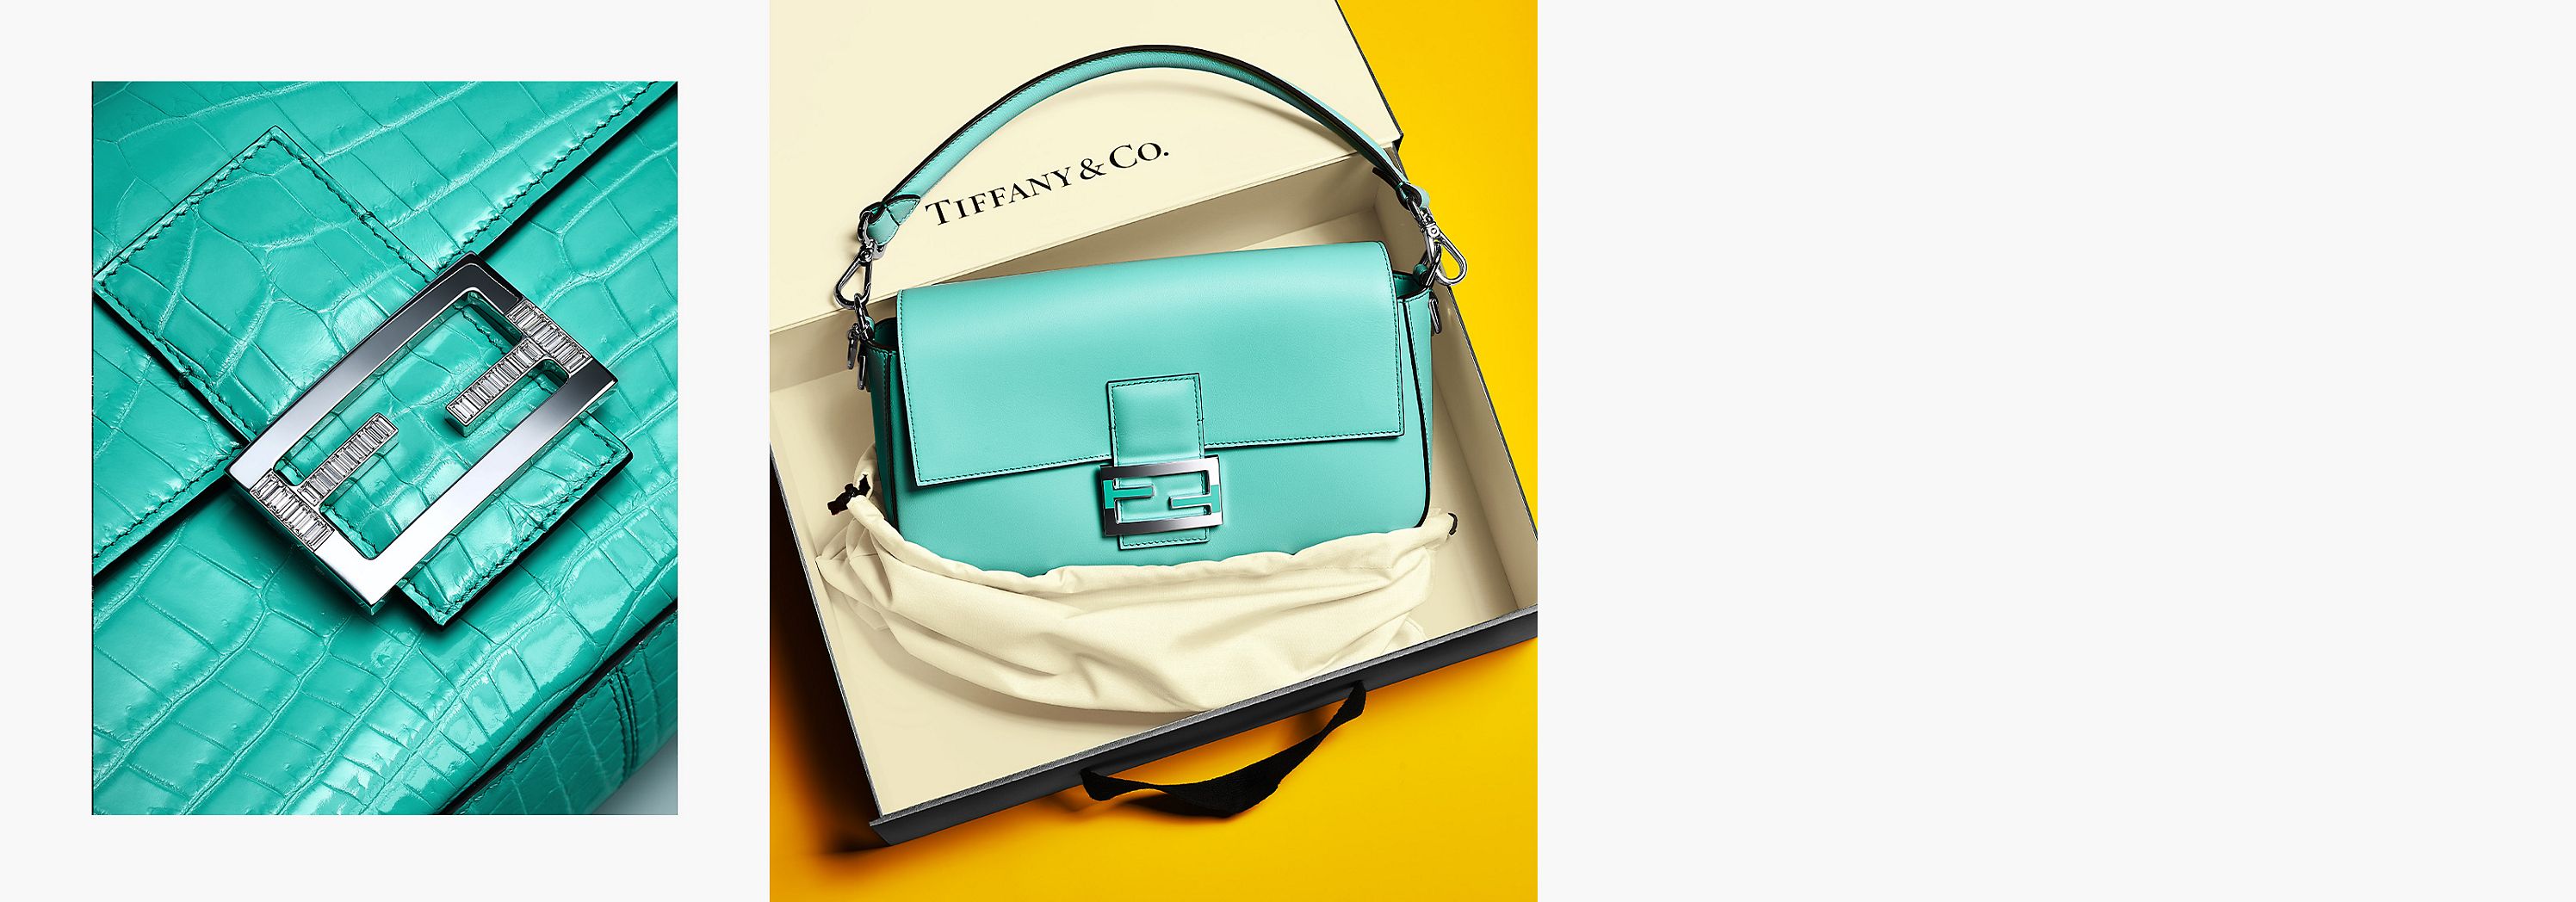 Tiffany & Co. x FENDI